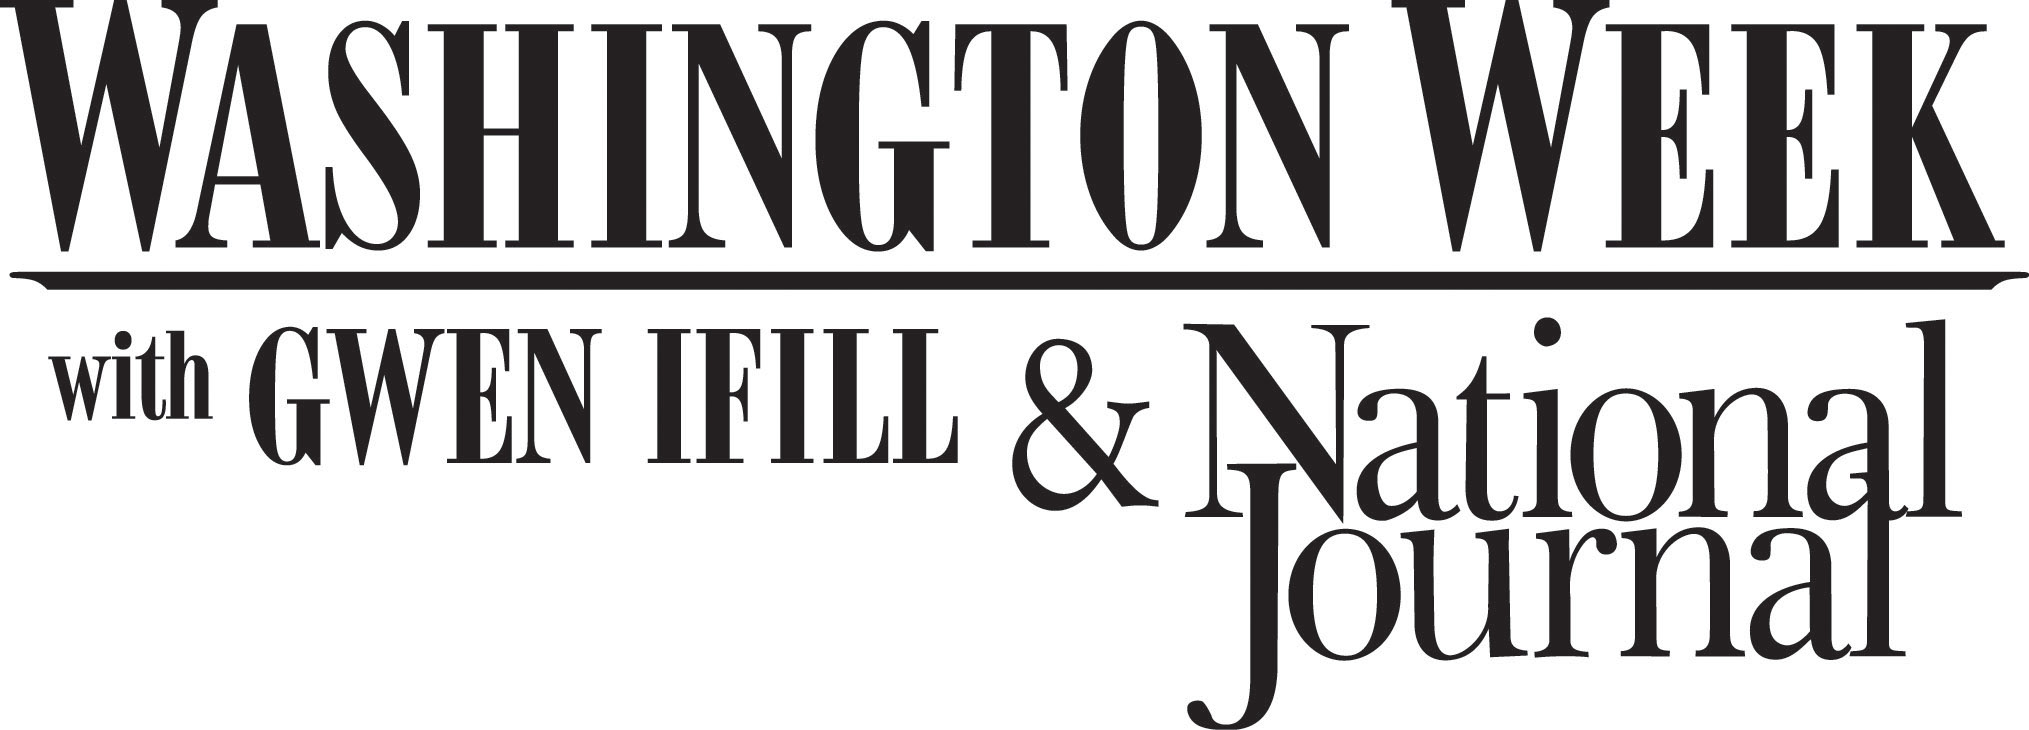 Washington Week Logopedia, the logo and branding site